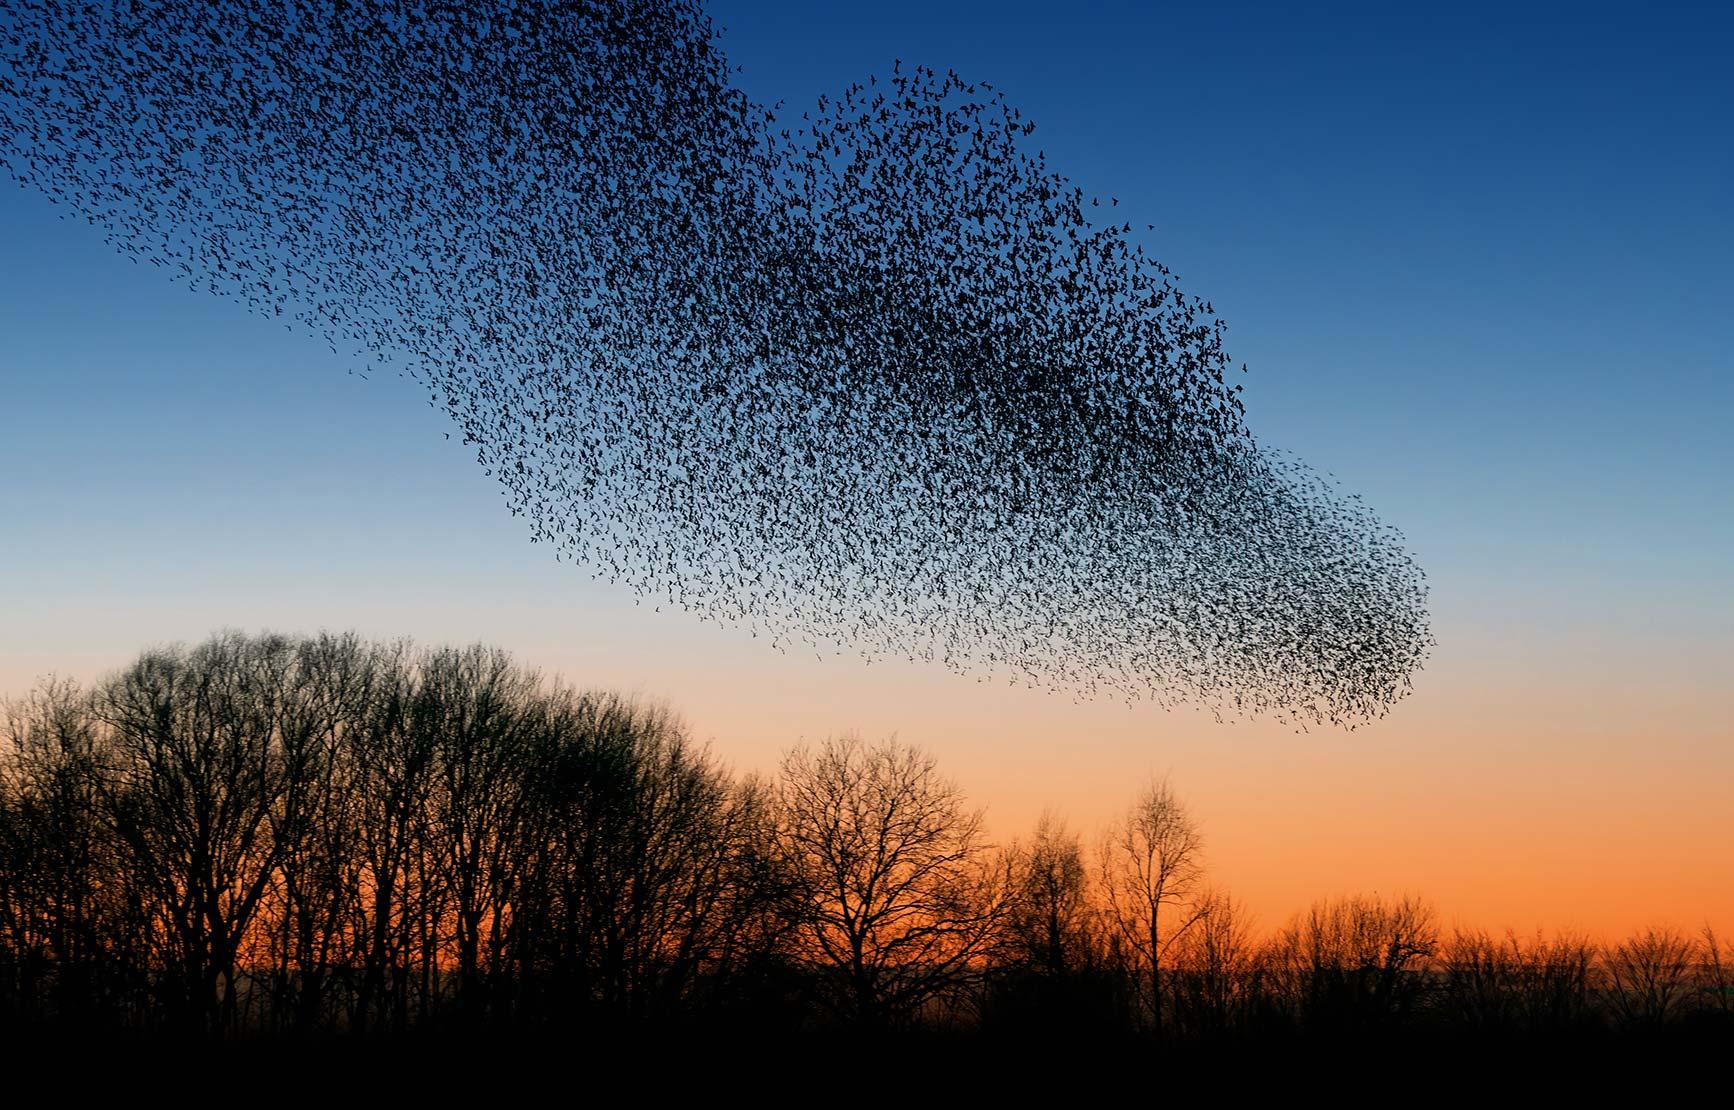 A flock of birds forms an interesting shape as it moves across an evening sky